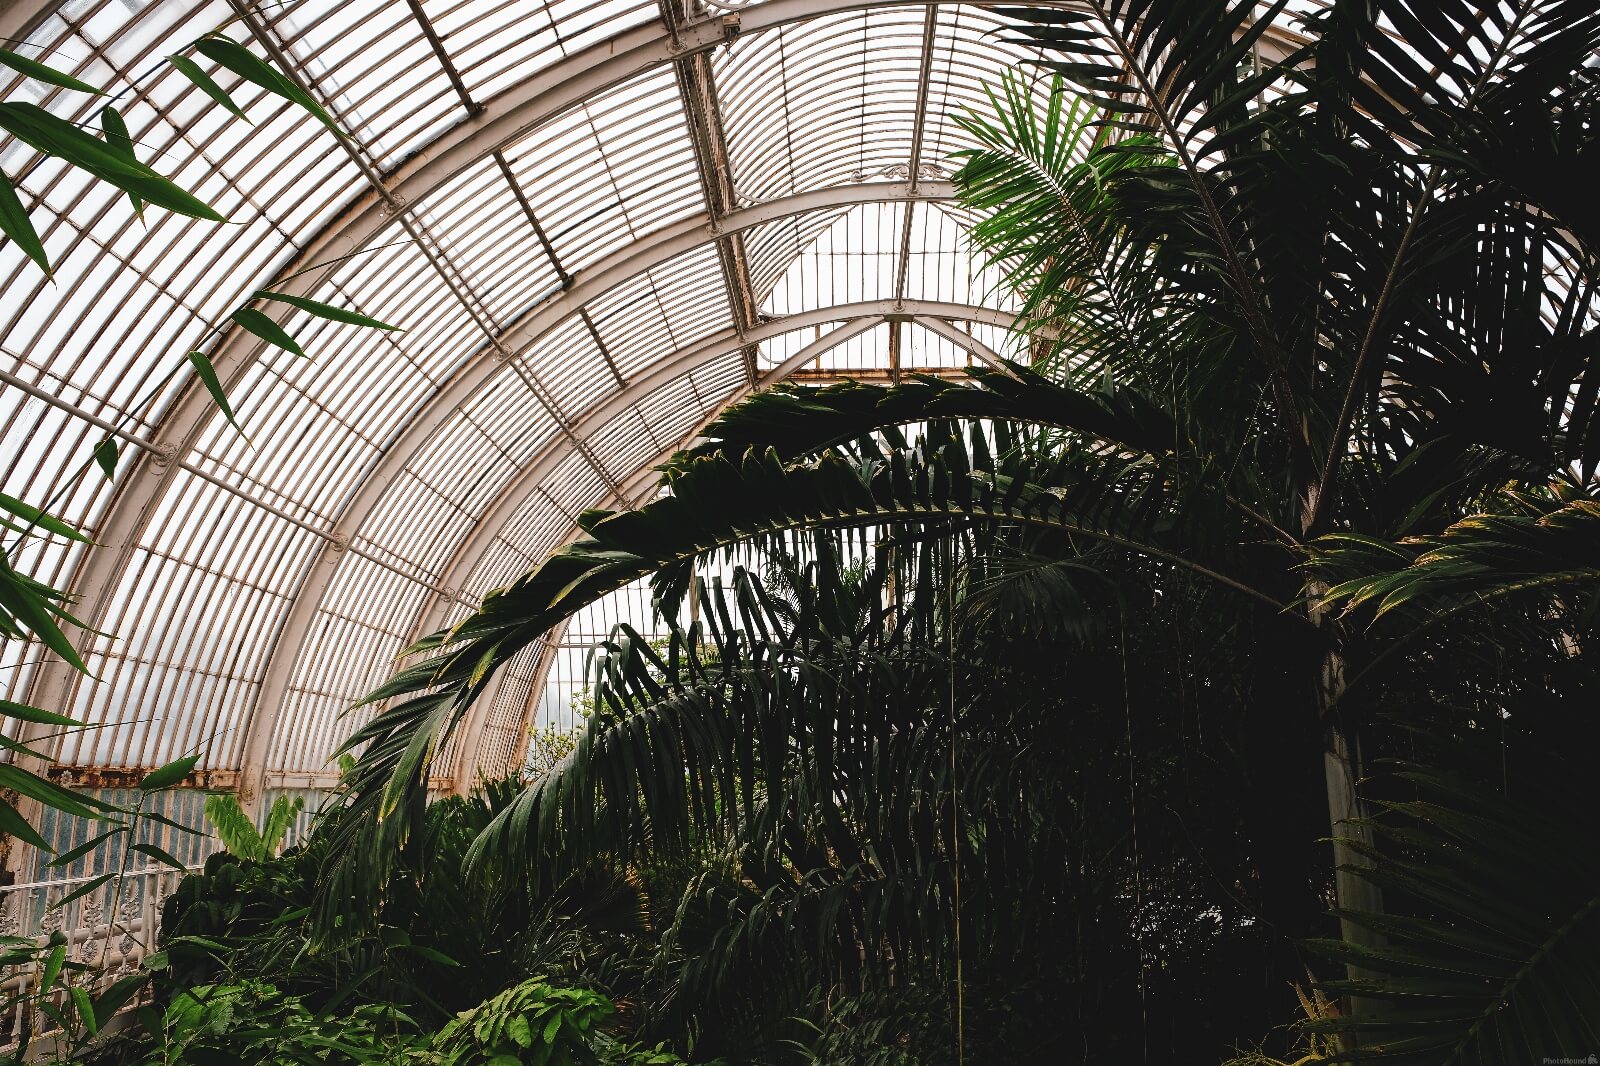 Image of Royal Botanic Gardens Kew by Jonny Brown